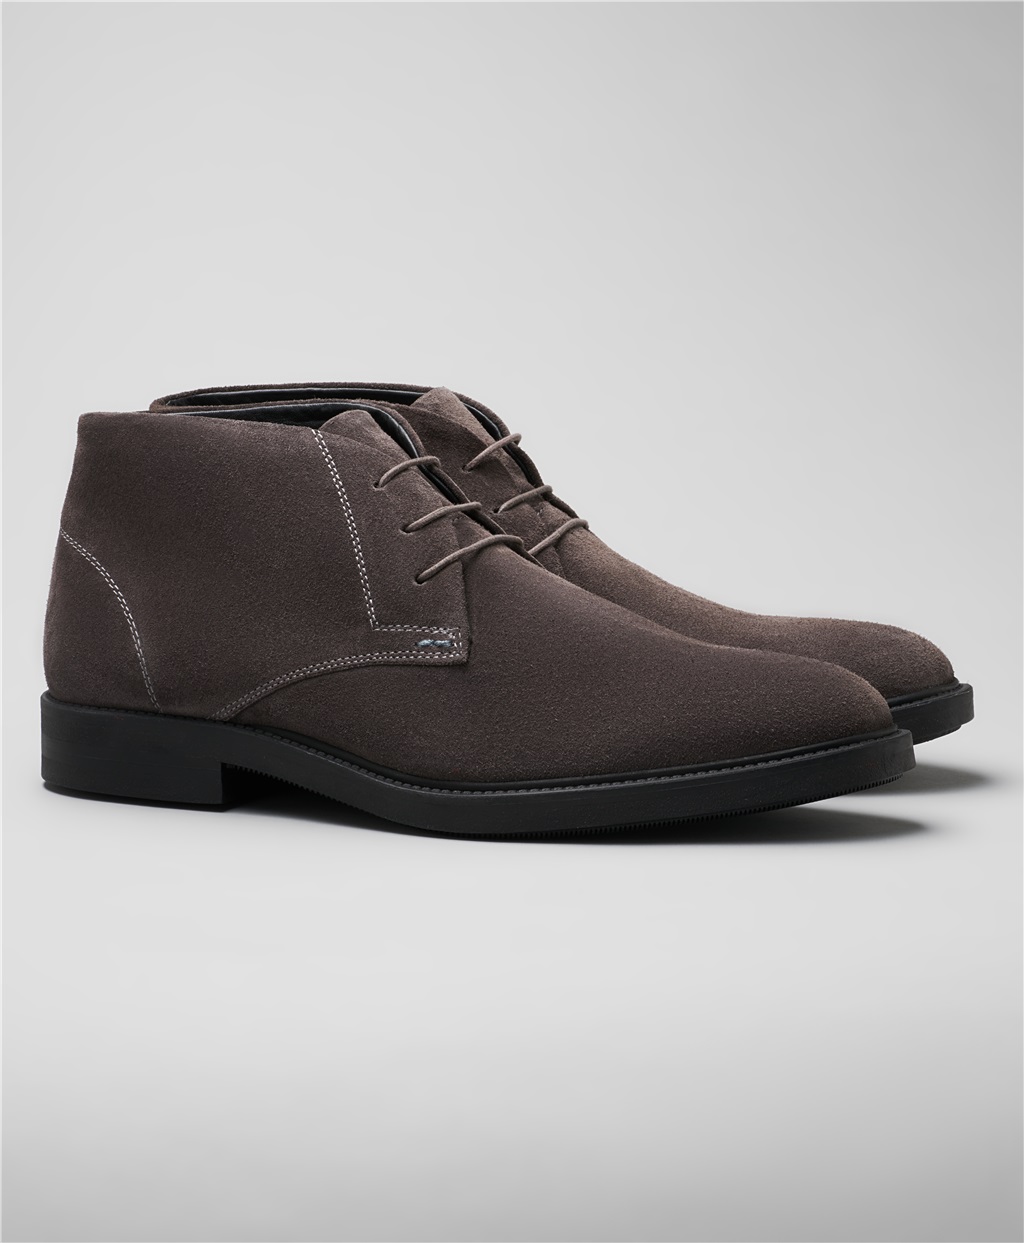 Мужская обувь хендерсон. Grey ботинки мужские Henderson SS-0436. Обувь Хендерсон мужская. Хендерсон зимняя обувь.